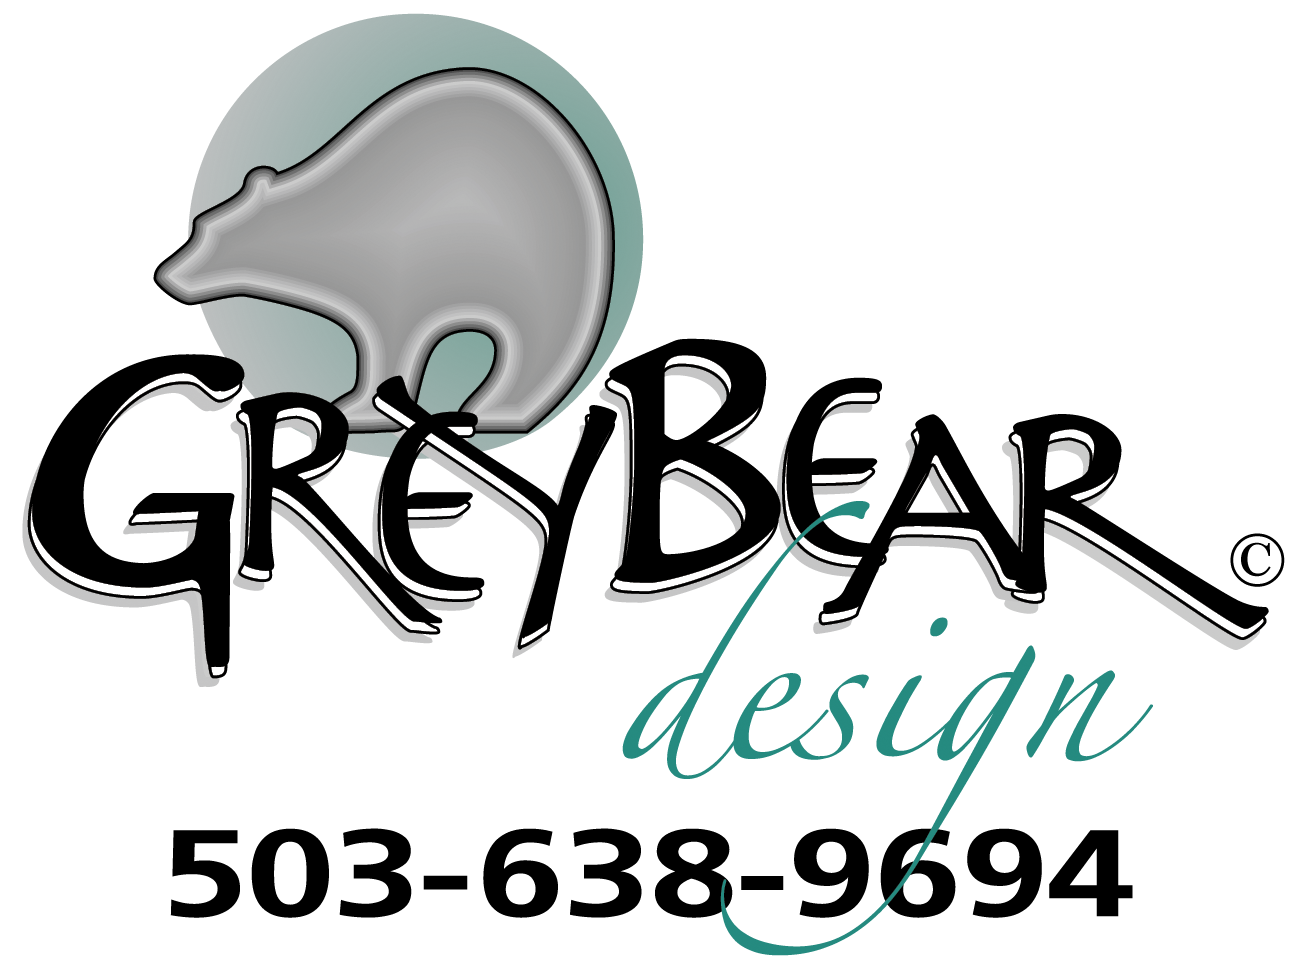 Greybear Design